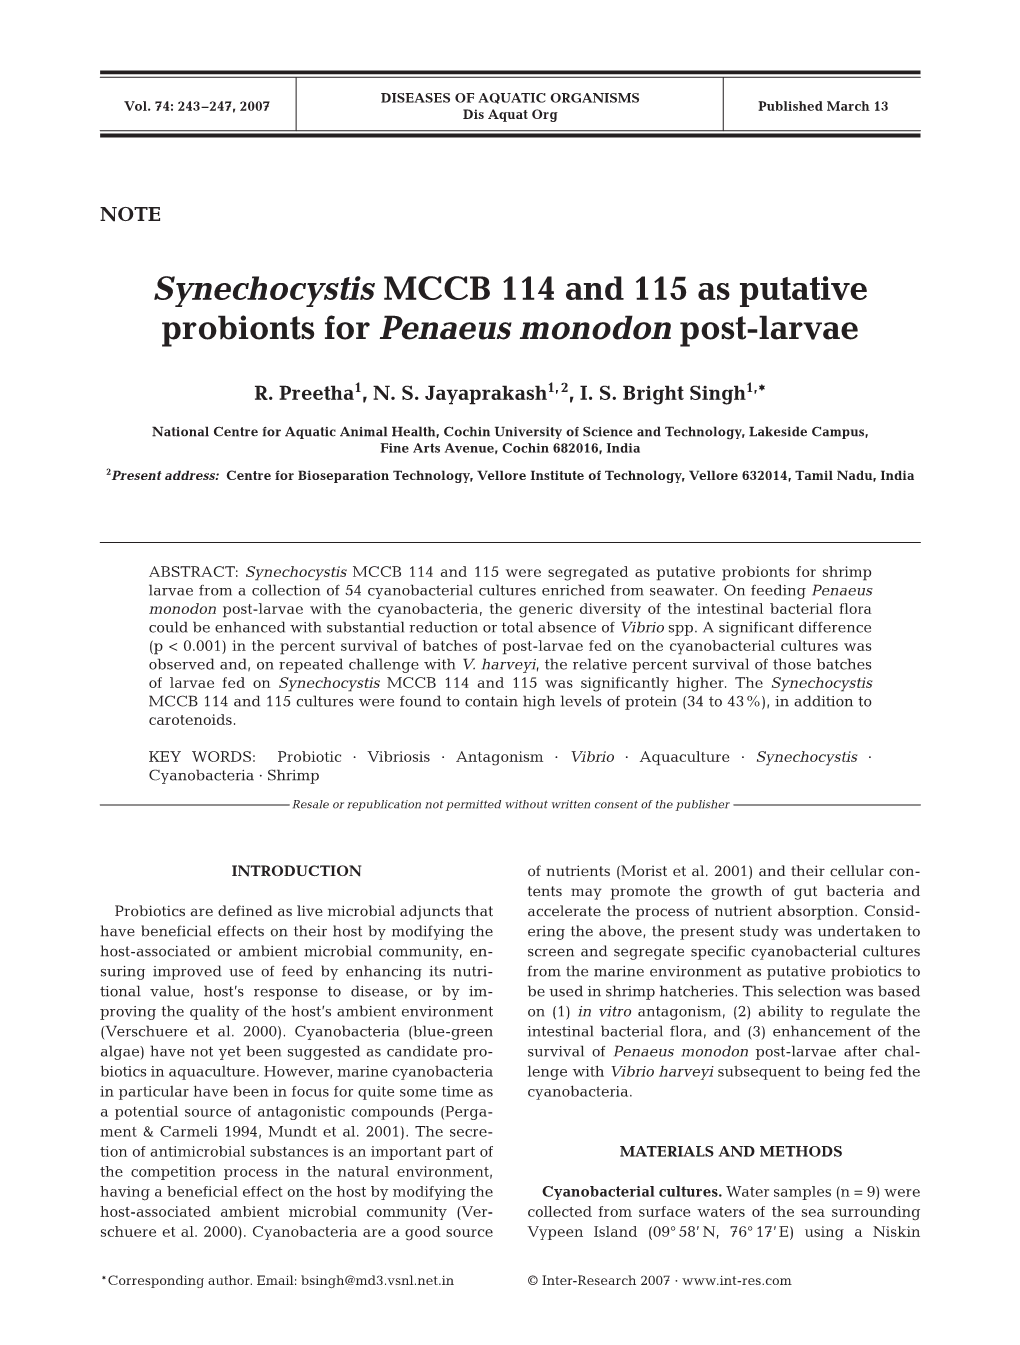 Synechocystis MCCB 114 and 115 As Putative Probionts for Penaeus Monodon Post-Larvae